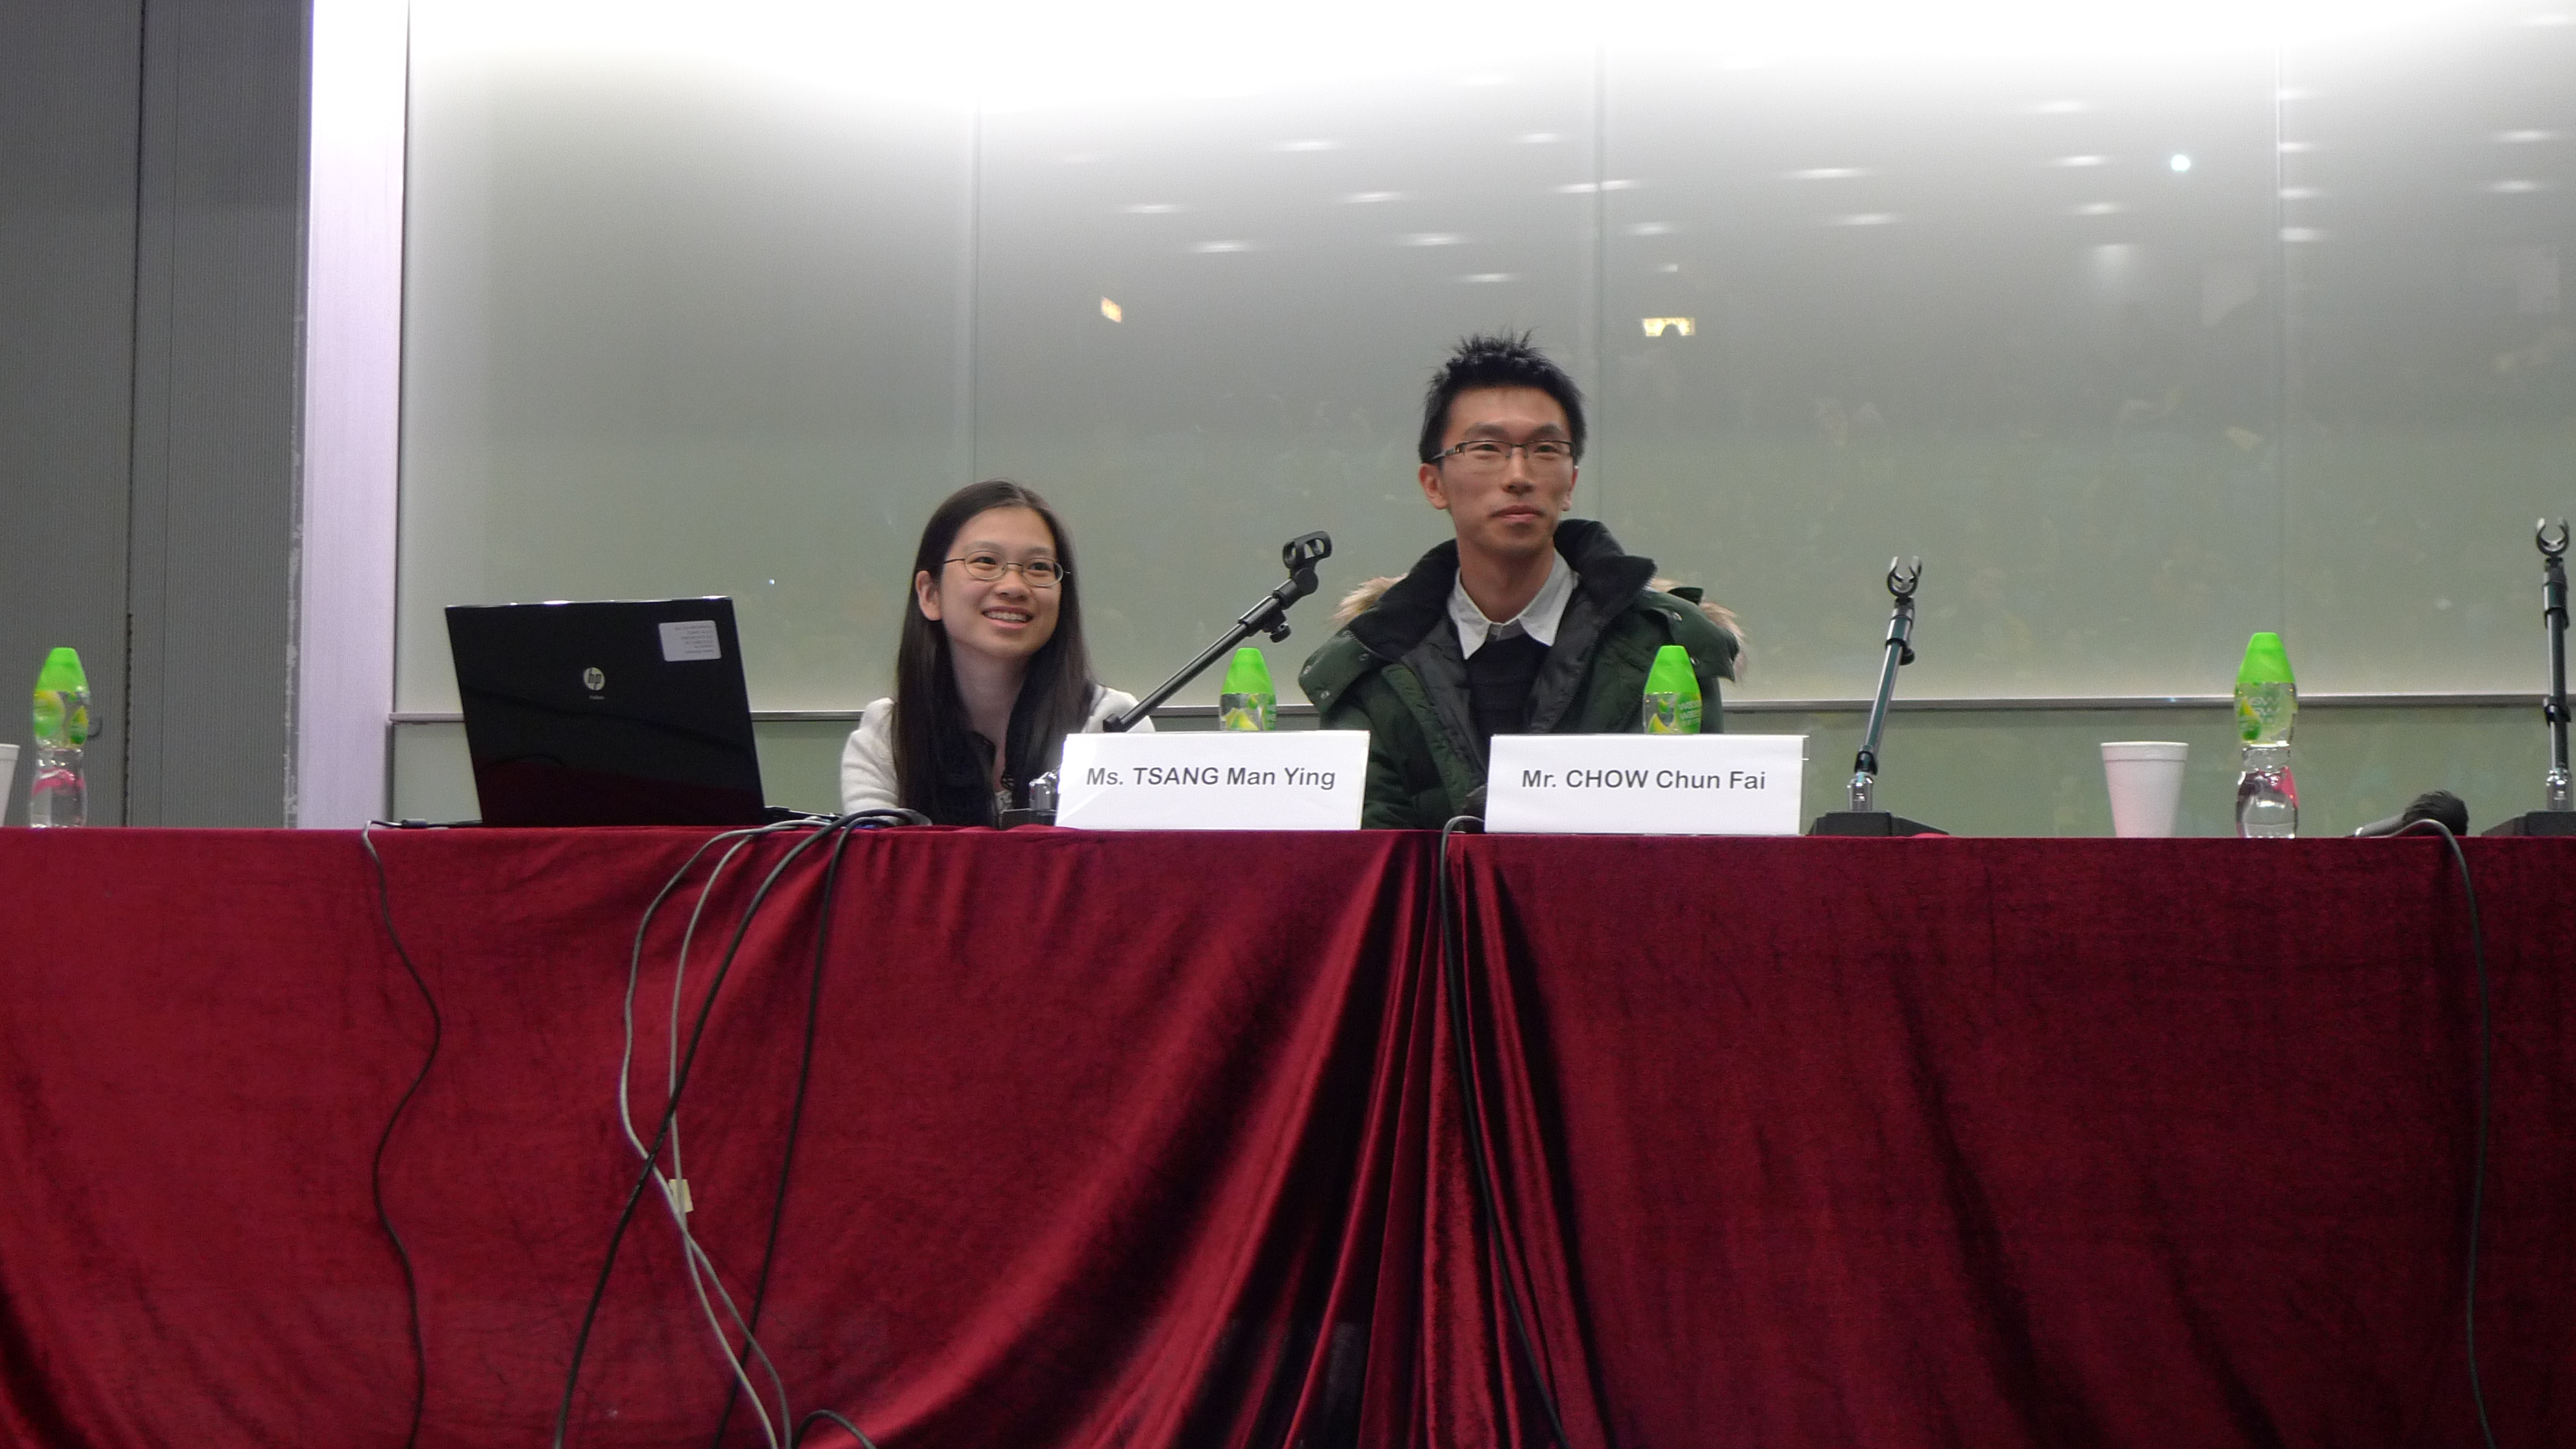 From left to right: Ms Tsang Man Ying, Mr Chow Chun Fai 